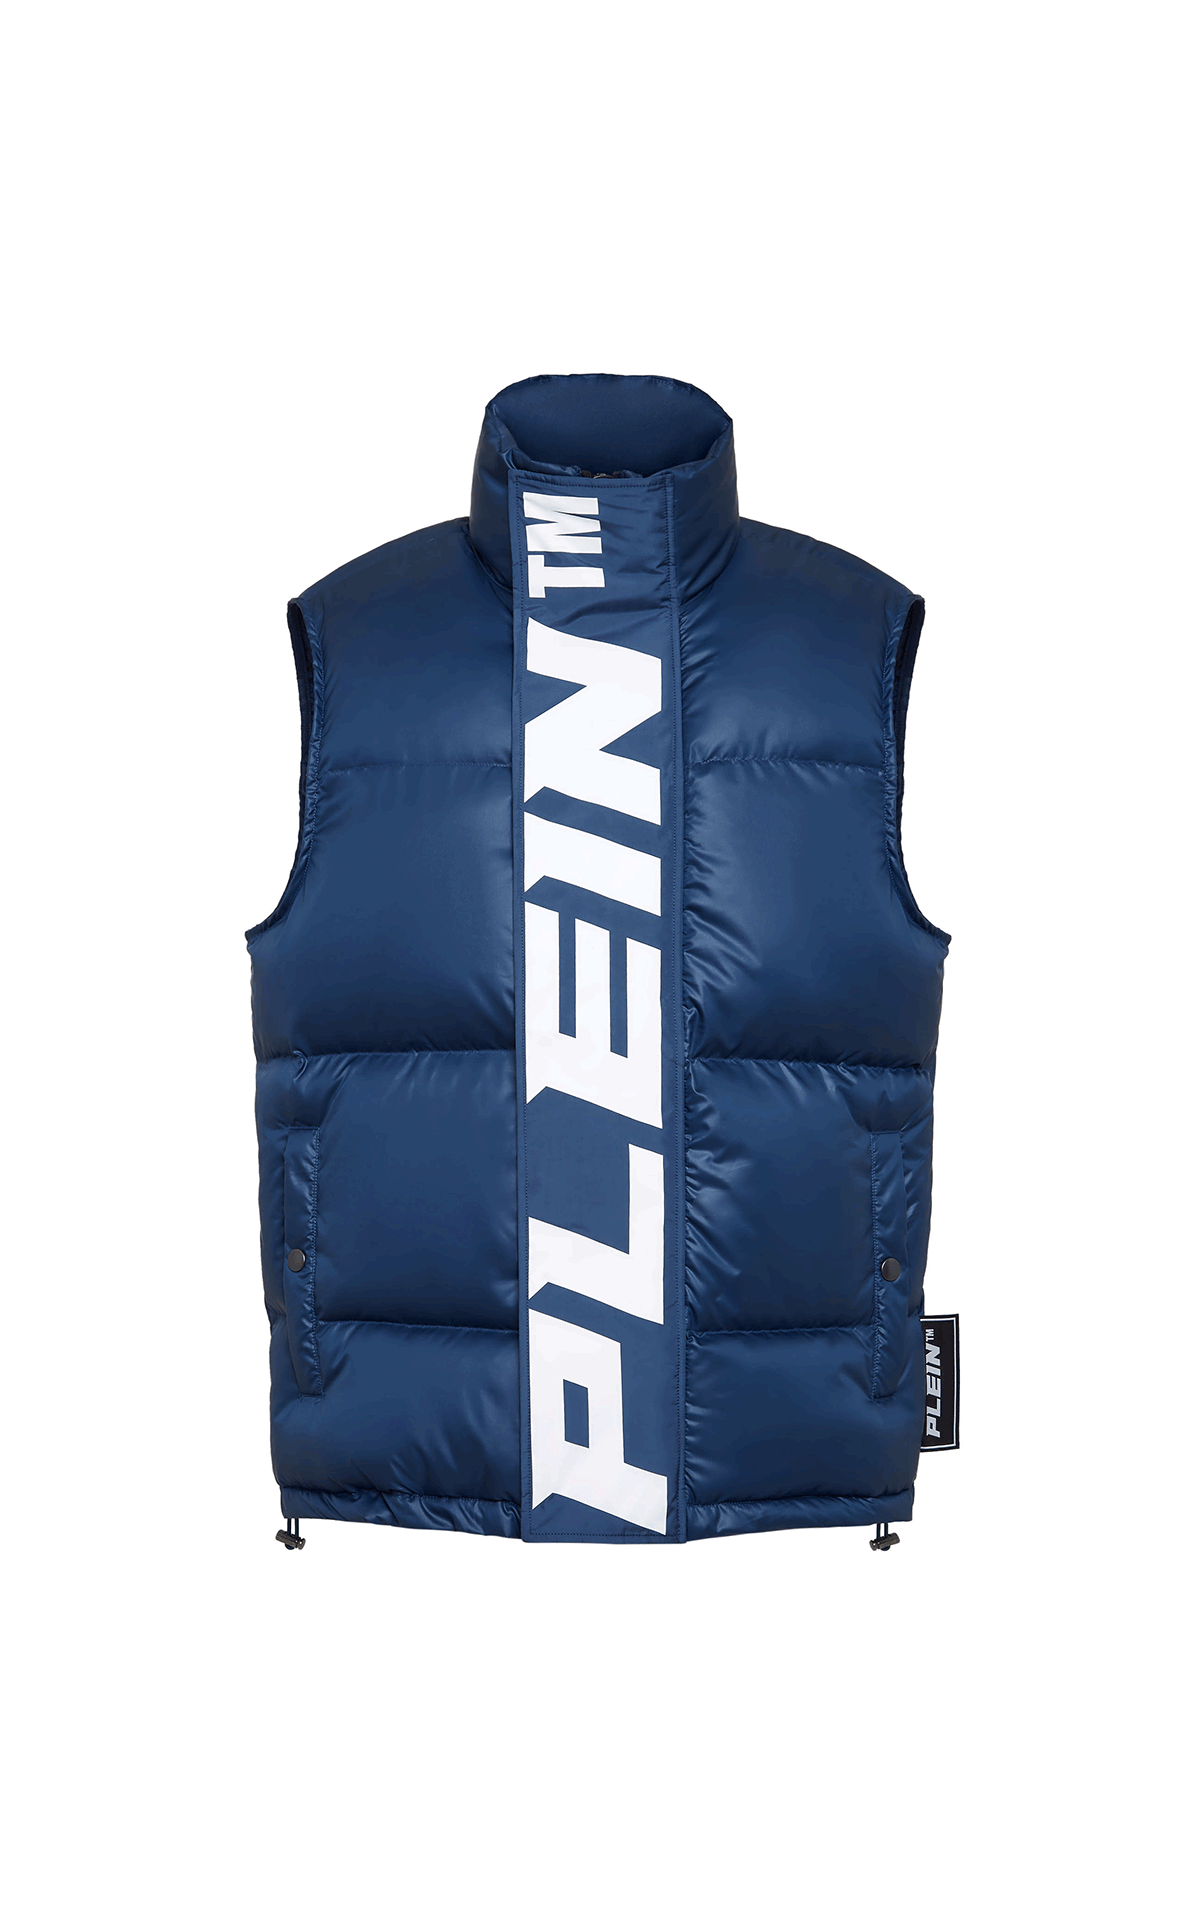 Blue vest with logo Philipp Plein